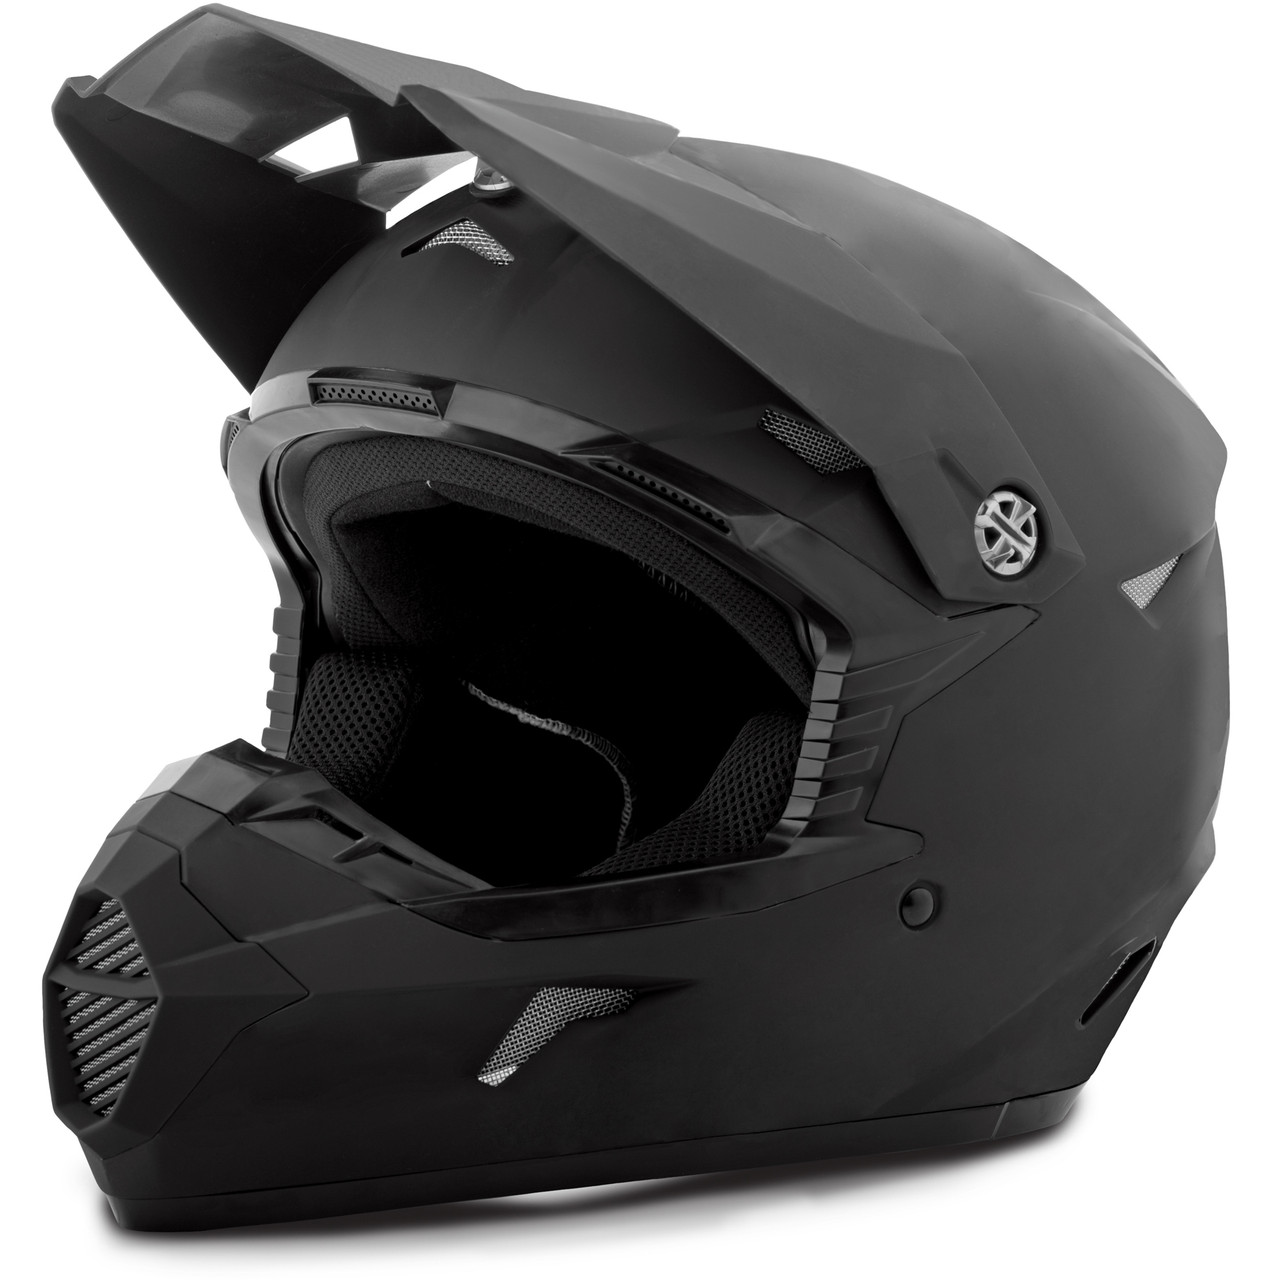 Off-Road Motorcycle Gear & Helmets